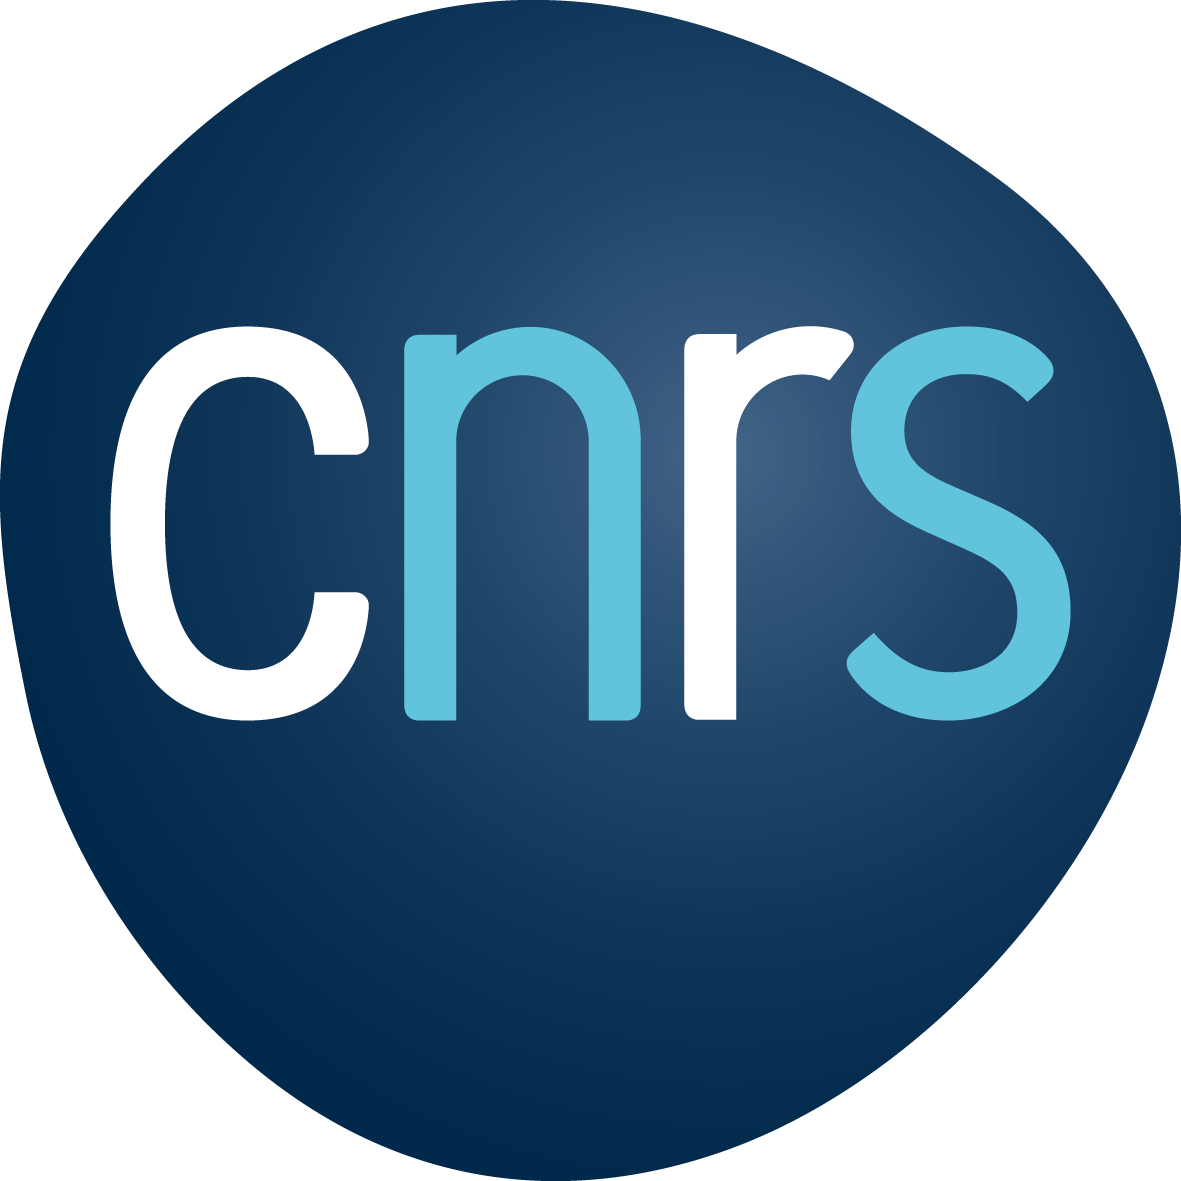 logo_cnrs_2019_rvb.png